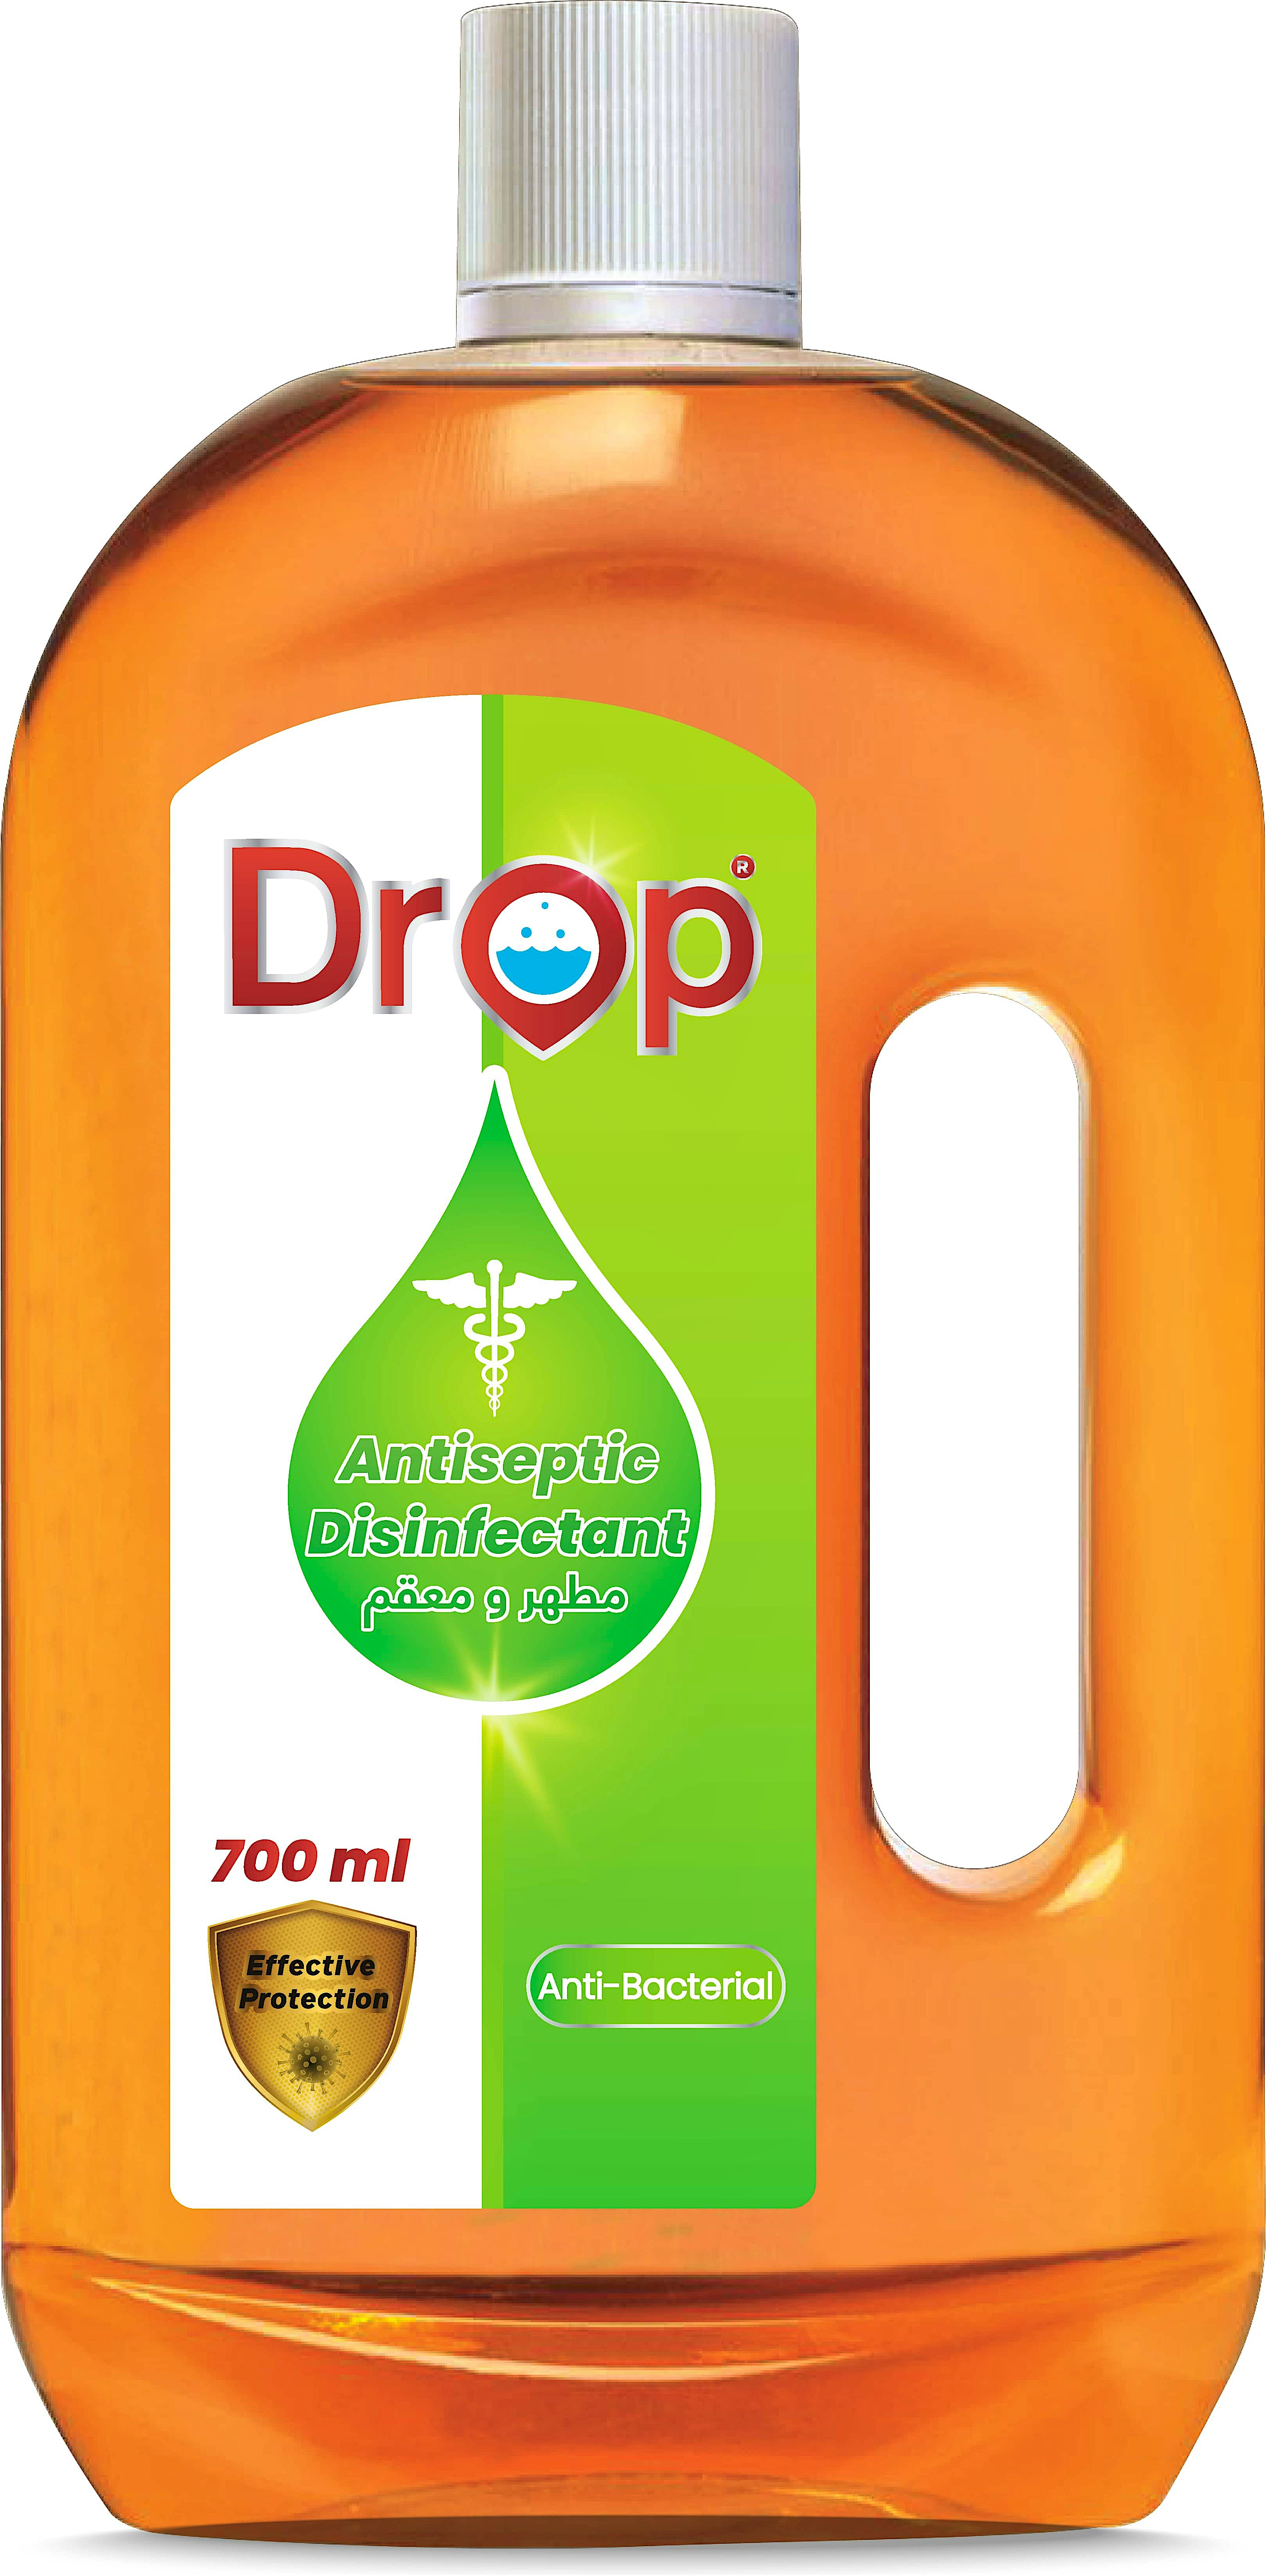 Drop Antiseptic Disinfectant 700 ml